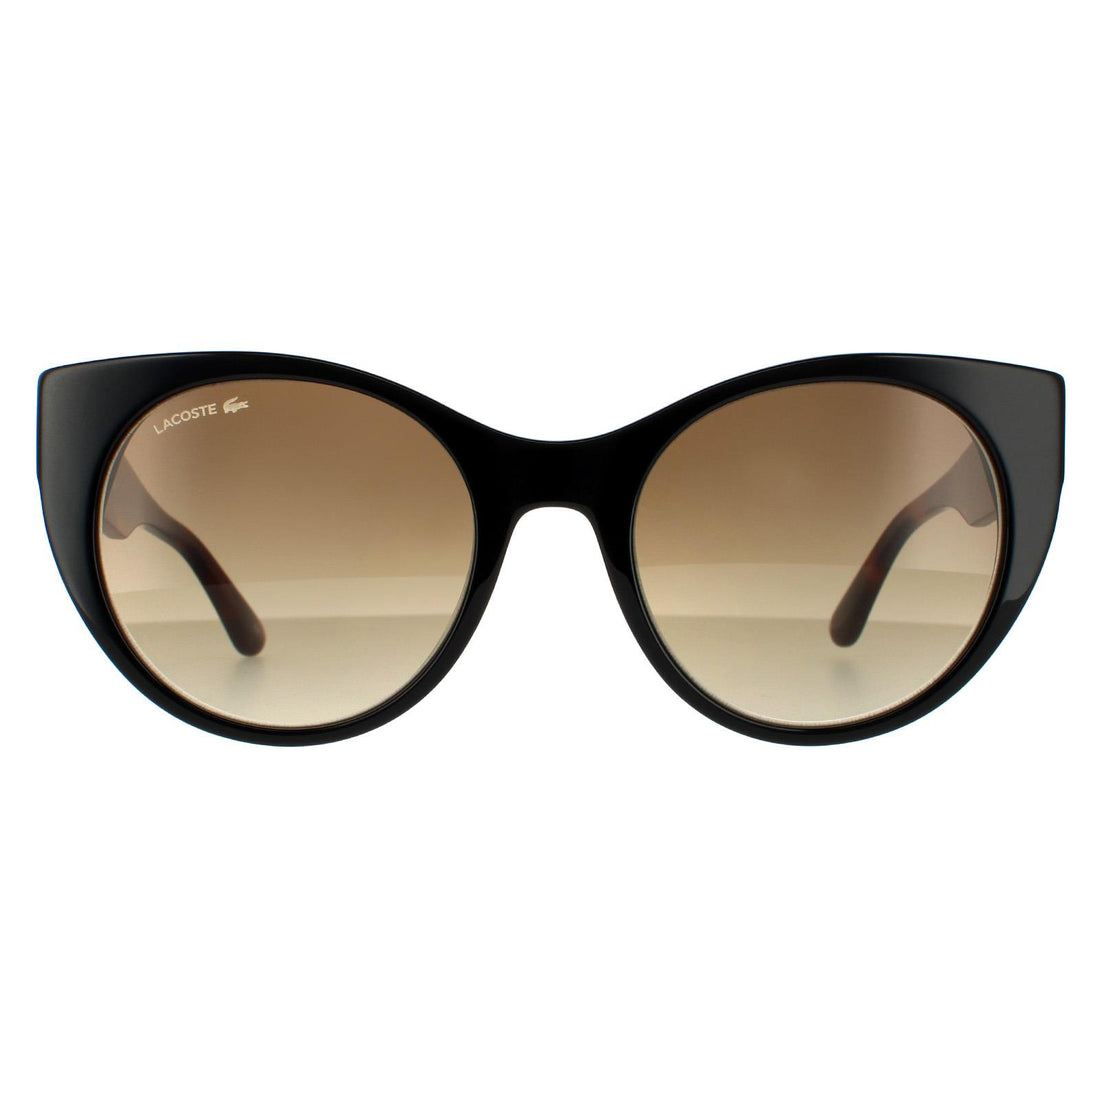 Lacoste L913S Sunglasses Black and Havana / Brown Gradient